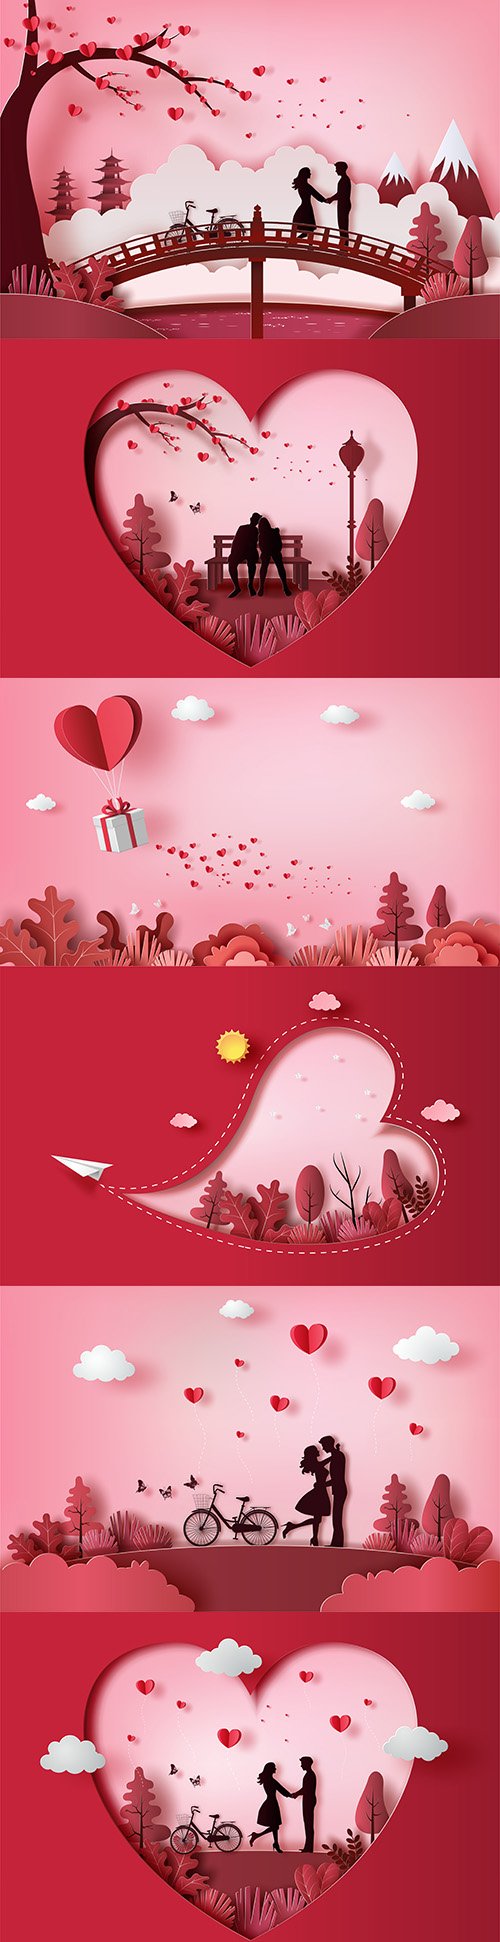 Happy Valentine's Day romantic decorative illustrations 35